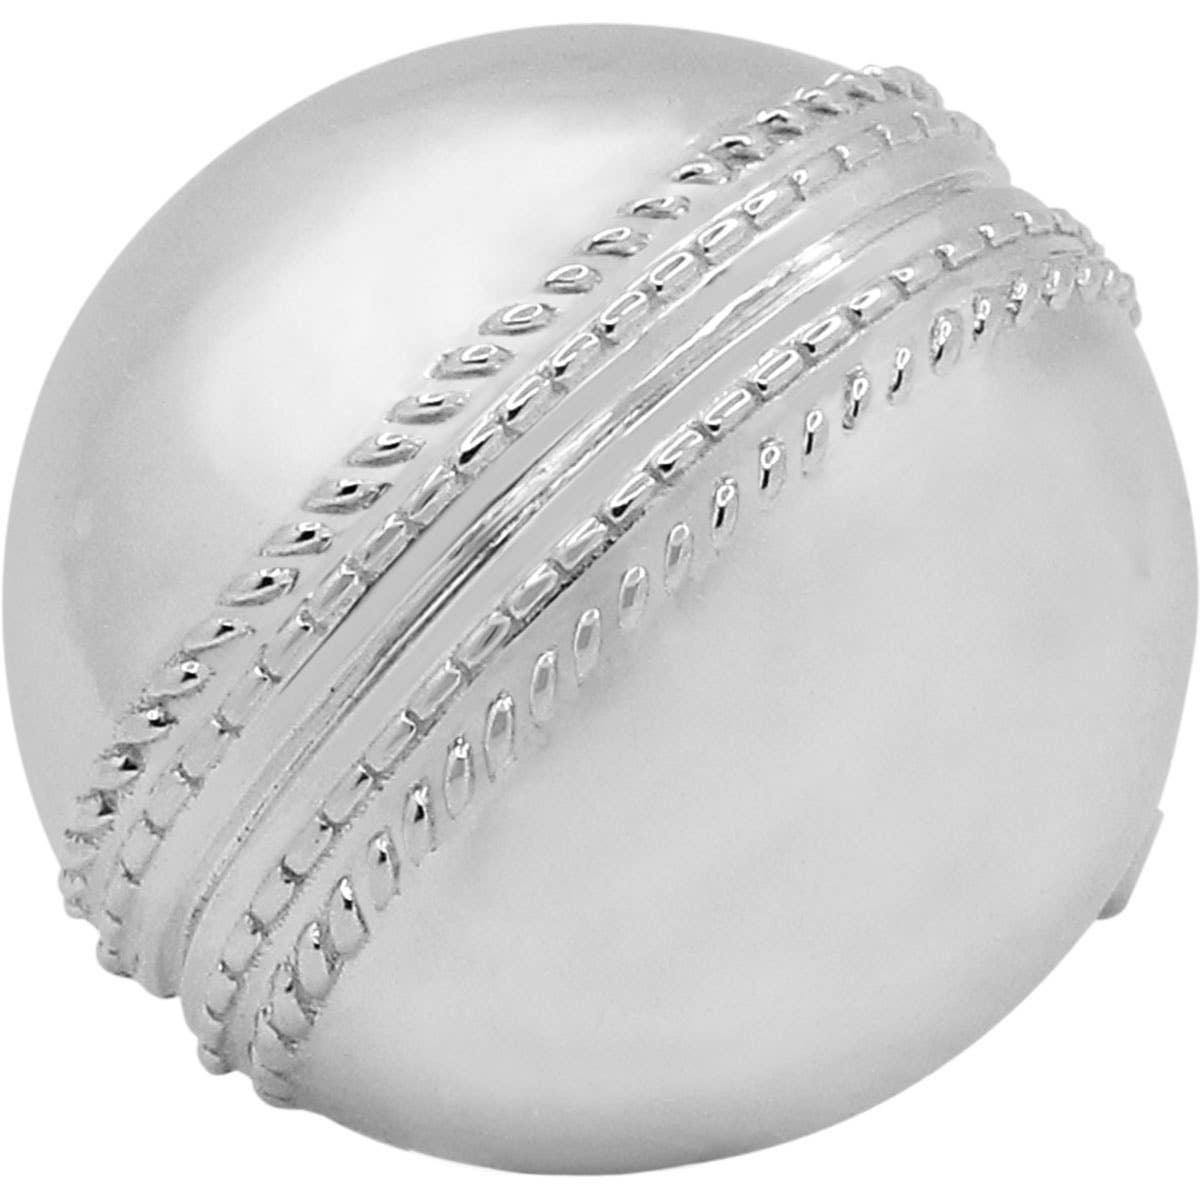 ICC Men's Cricket World Cup 2023 Rhodium-plated Silver Cricket Ball Cufflinks